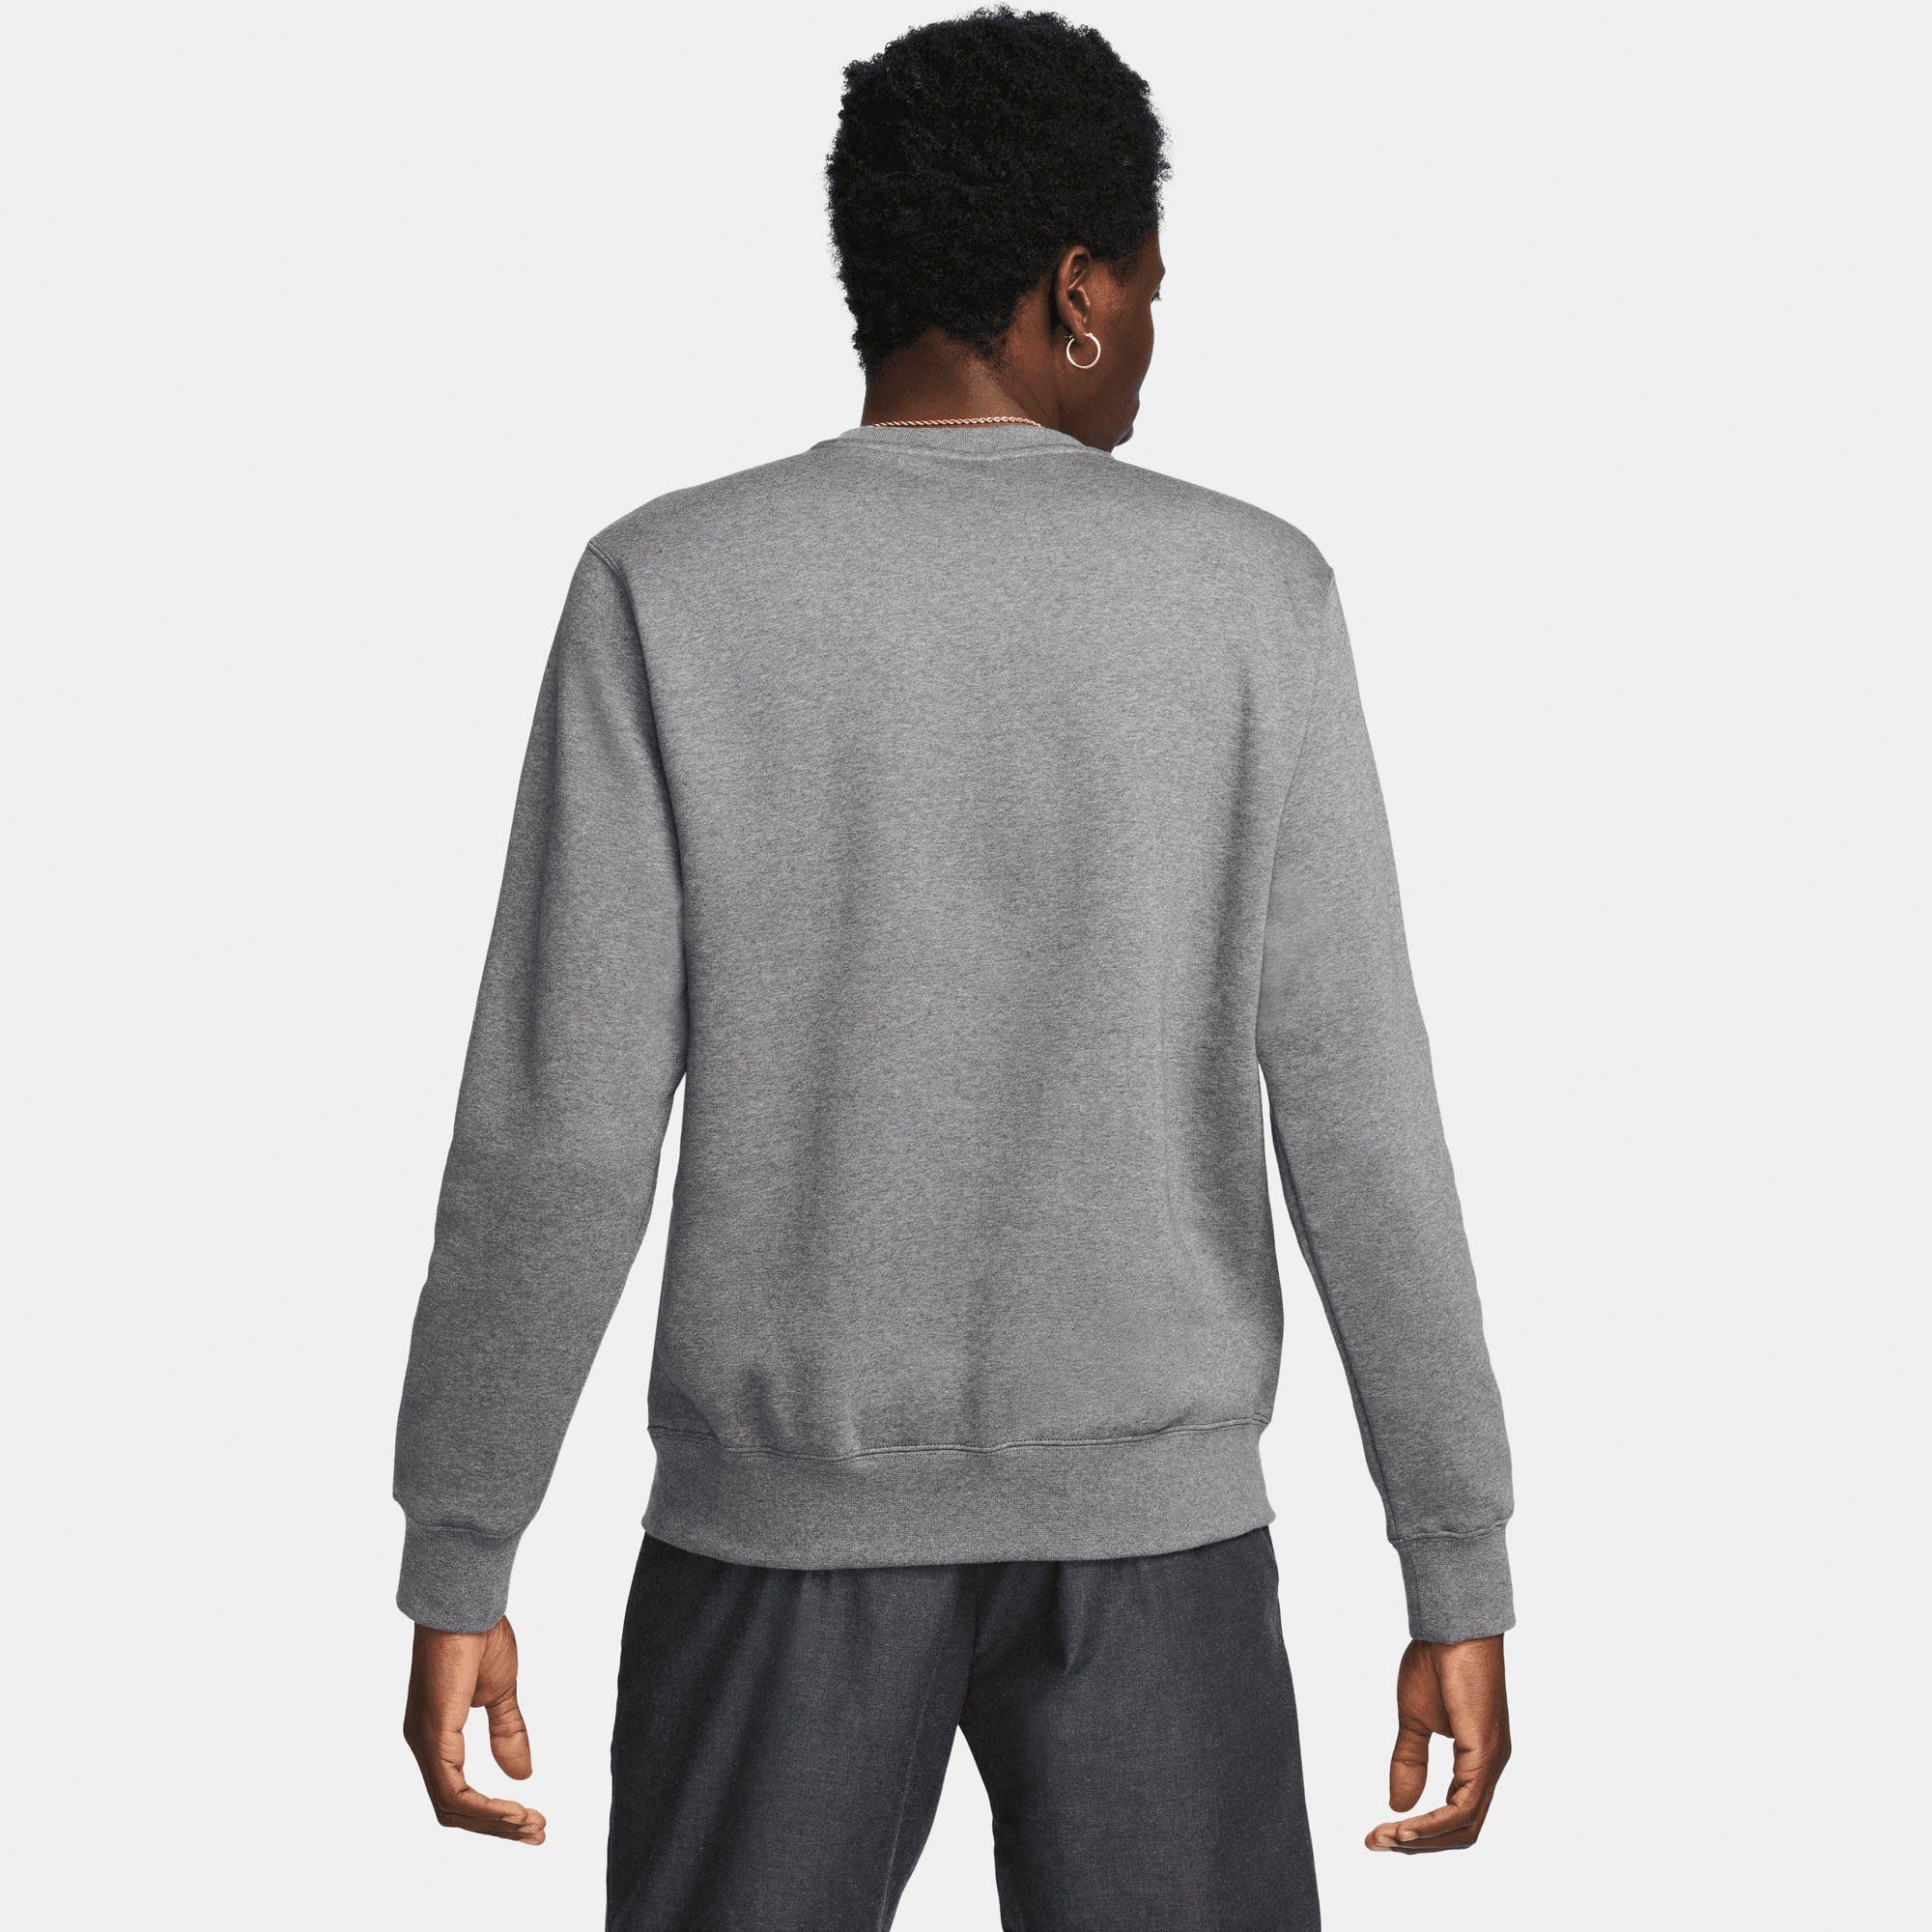 CHARCOAL HEATHR Sweatshirt Graphic Nike Men's Sportswear Crew Club Fleece